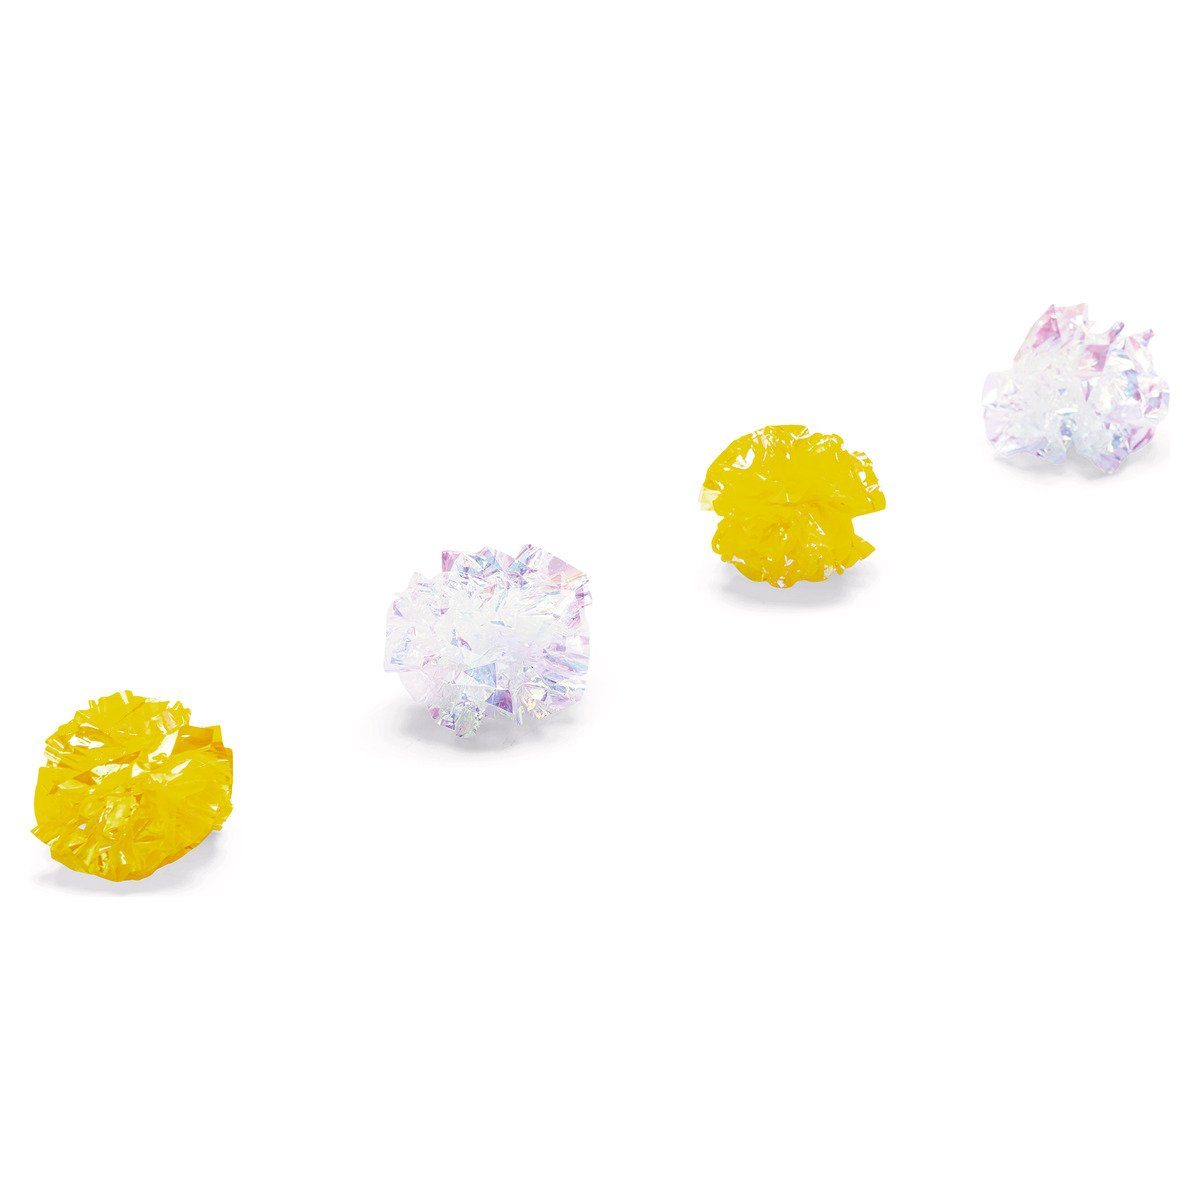 Katzenspielzeug gelb/transparent Knisterbälle Evy Kitten Beeztees Tierball